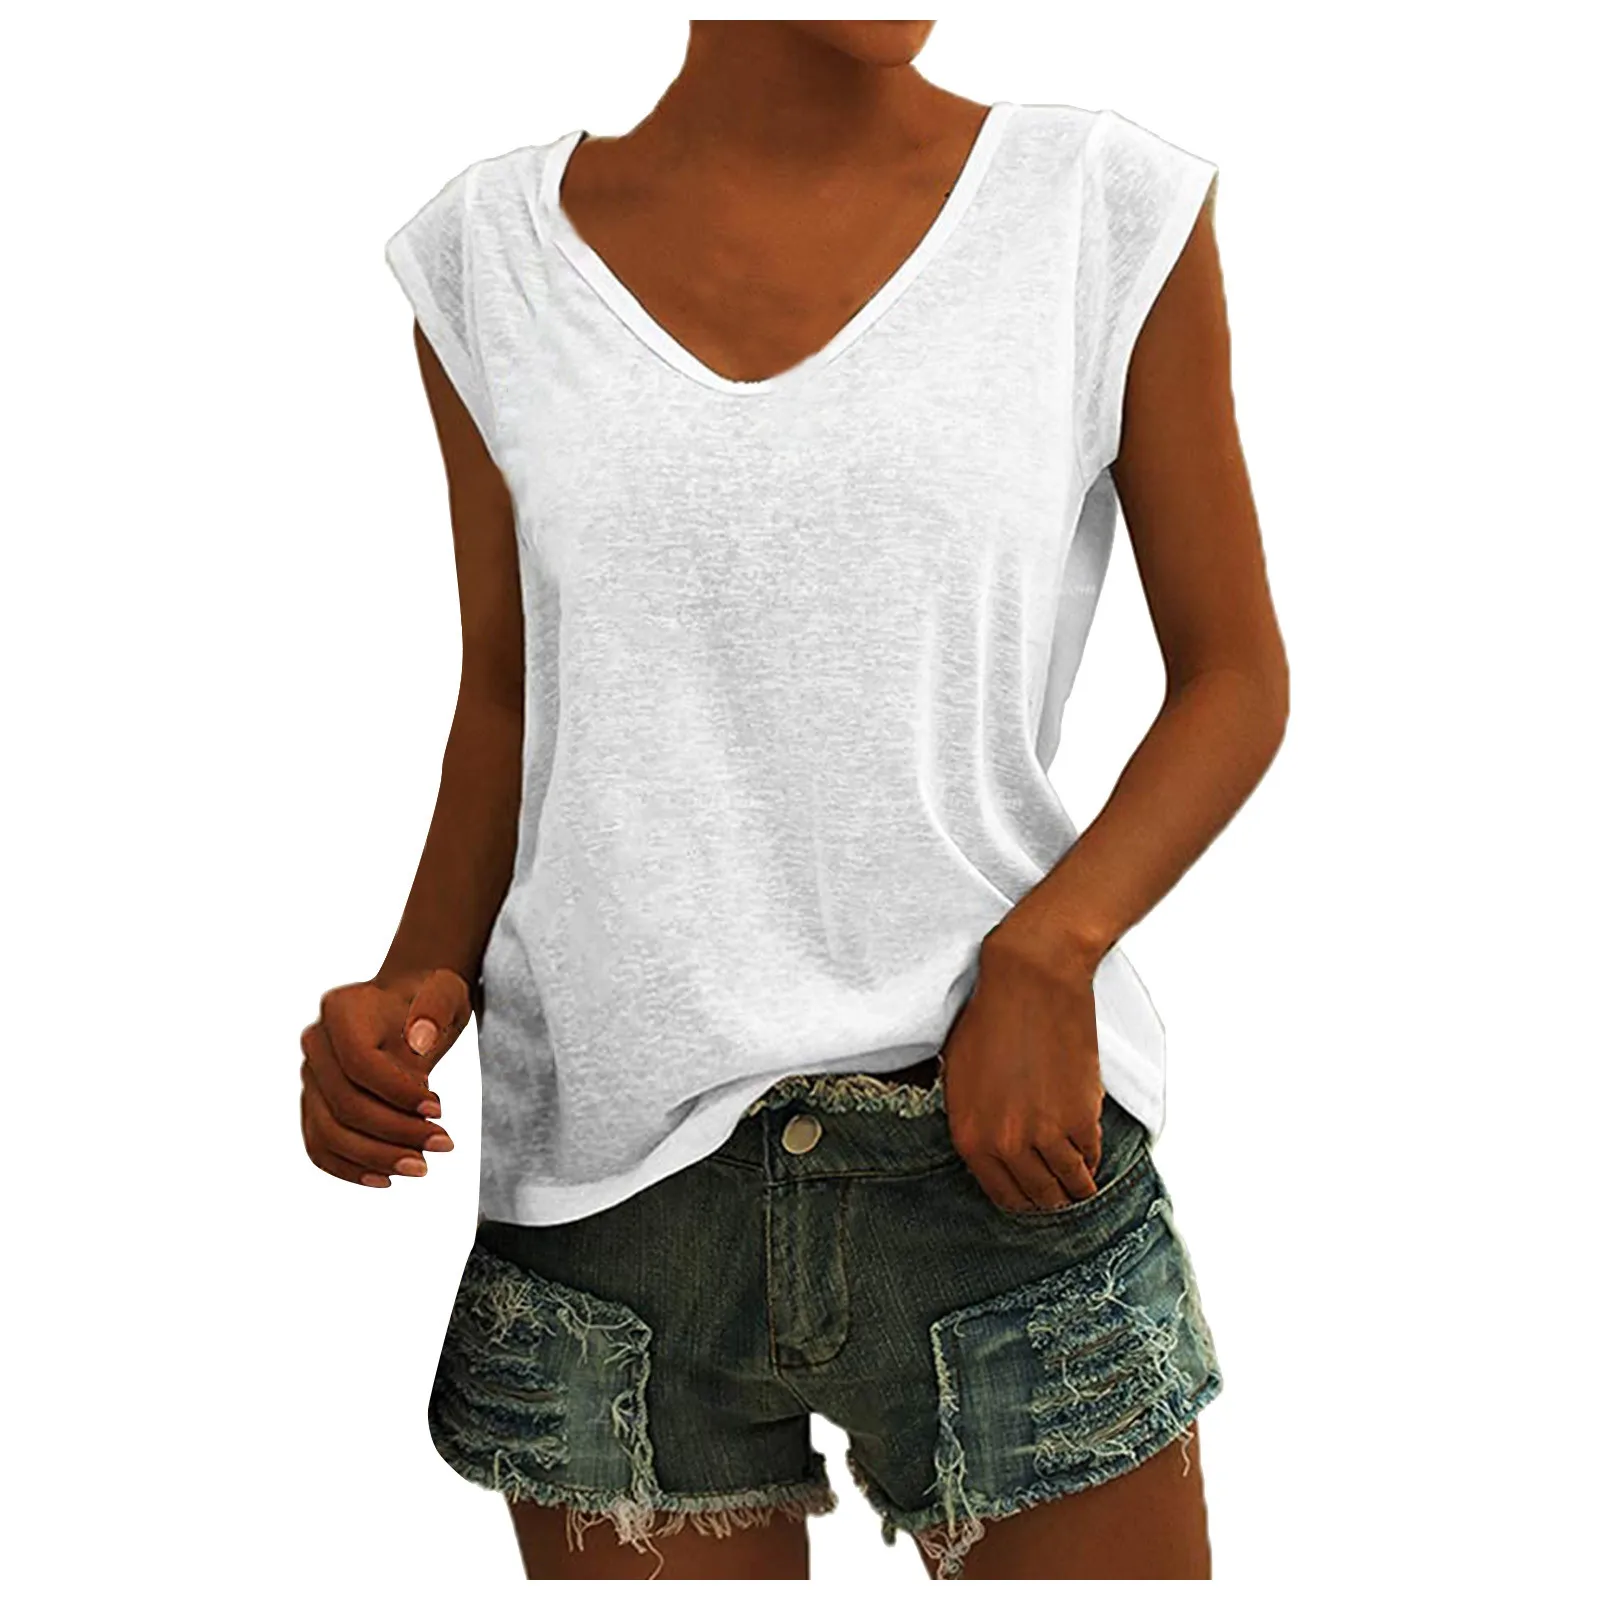 Women'S V-Neck T-Shirt Casual Cap Sleeve Vest Solid Loose Blouse Fit Tank Tops Women майка женская футболка женский Roupas Femin